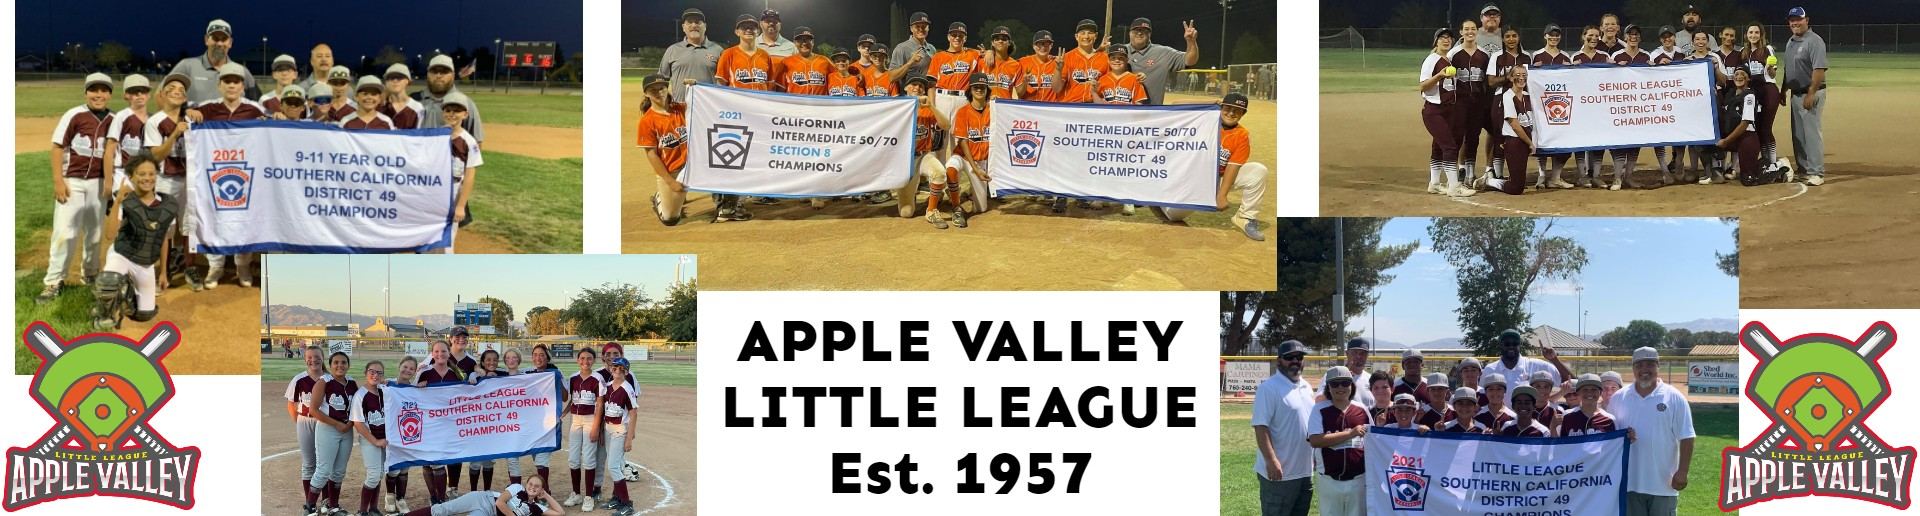 Apple Valley Little League 